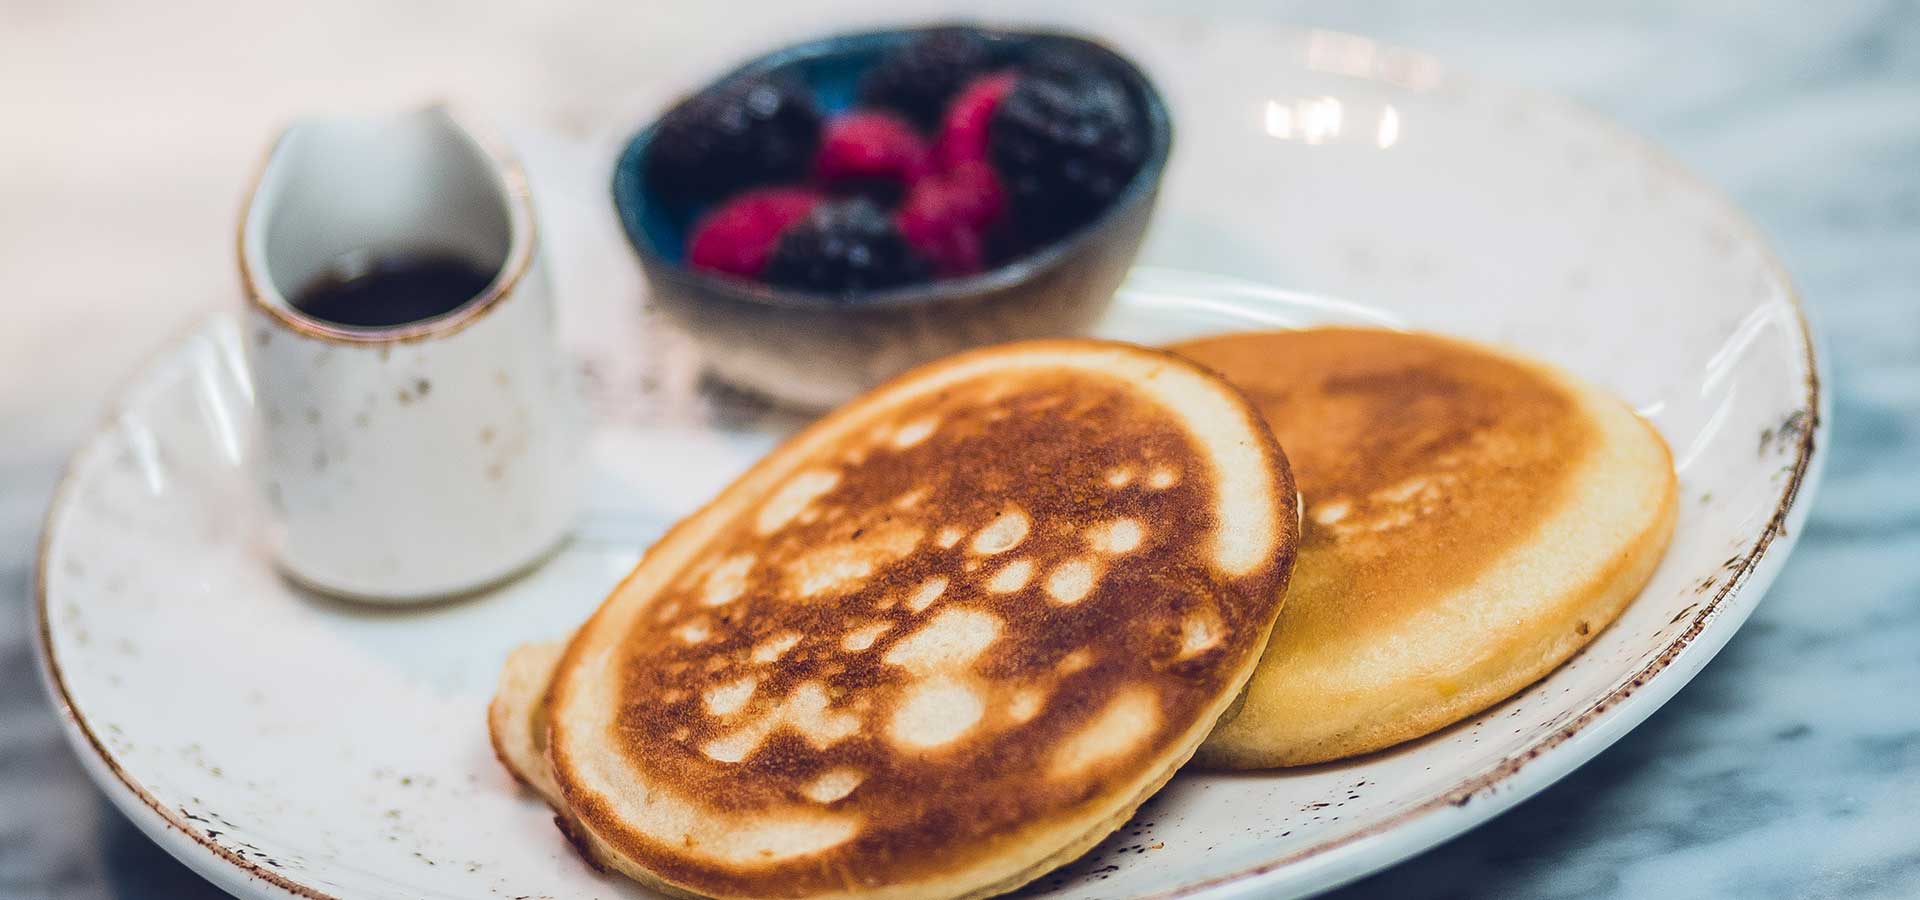 The Grand Pancakes